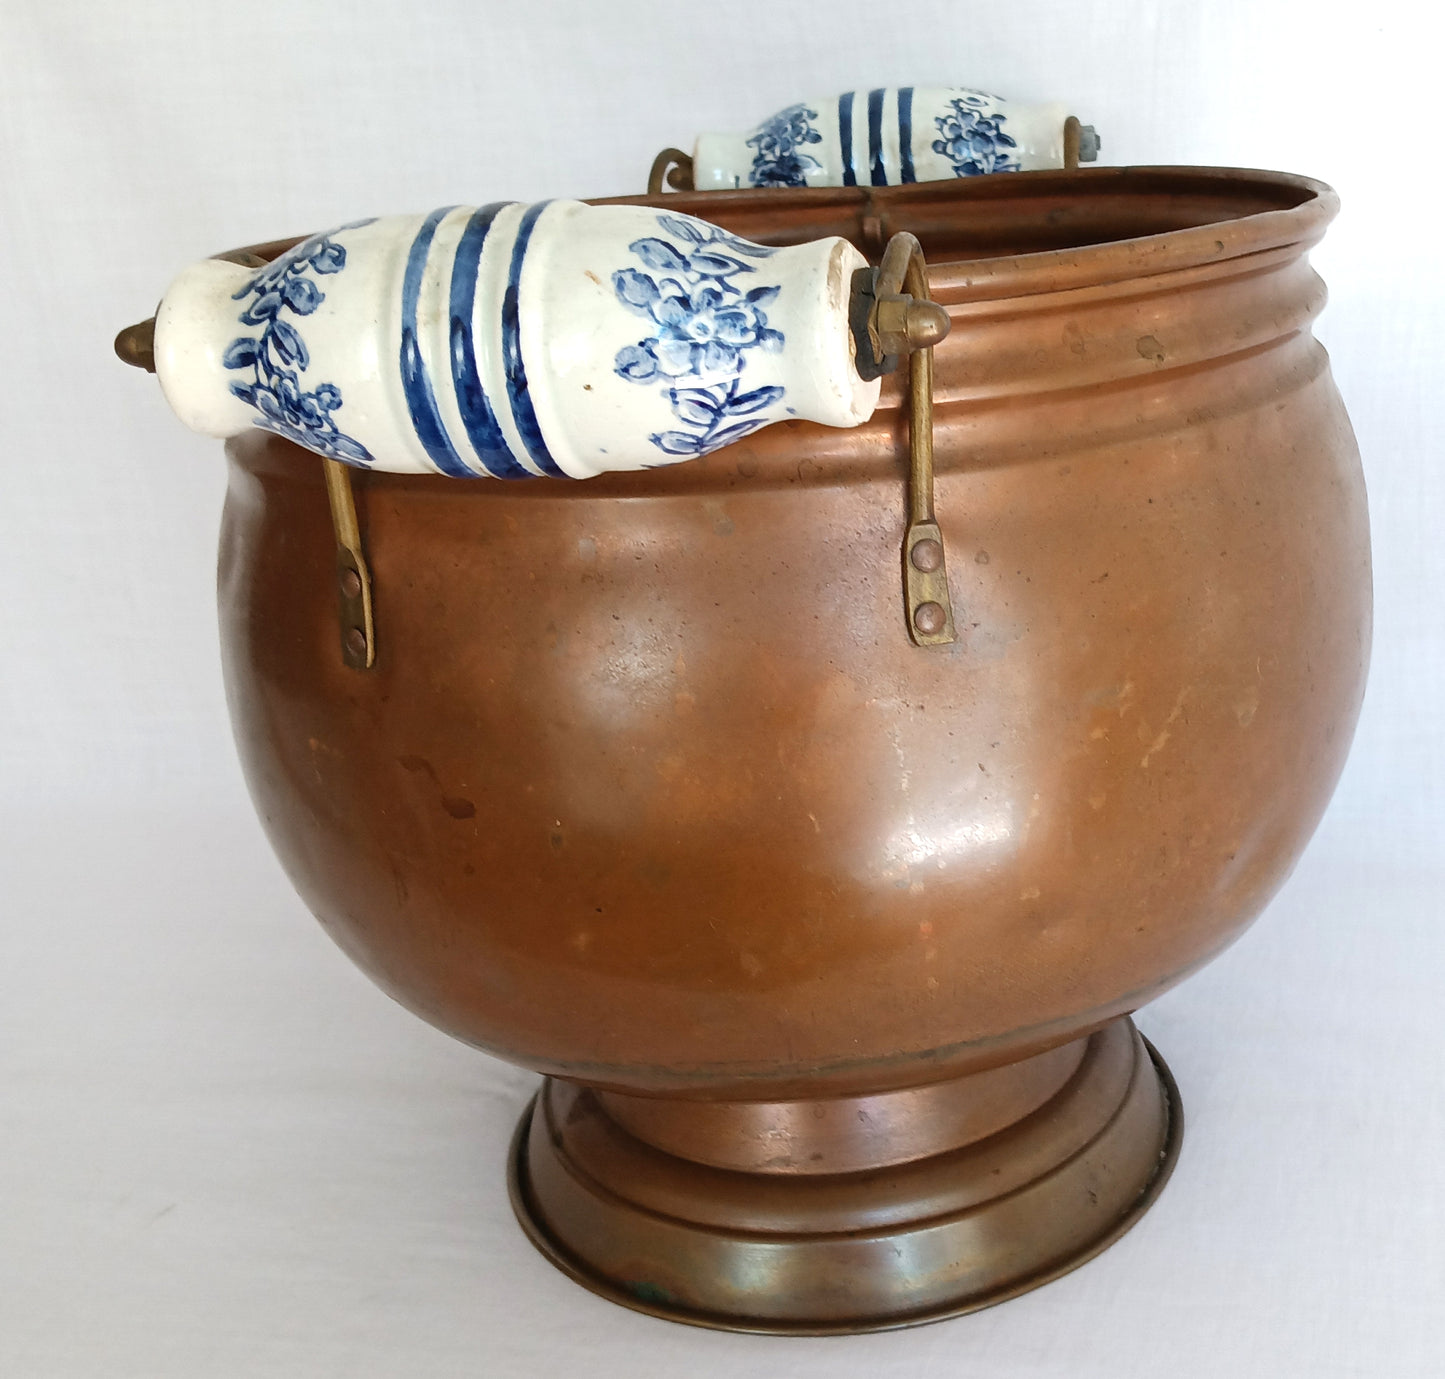 Vintage Dutch Copperware Planter Delft Blue Ceramic Handles Pedestal Large Flower Pot Holder Kitchen Farmhouse Rustic Décor-Made In Ireland